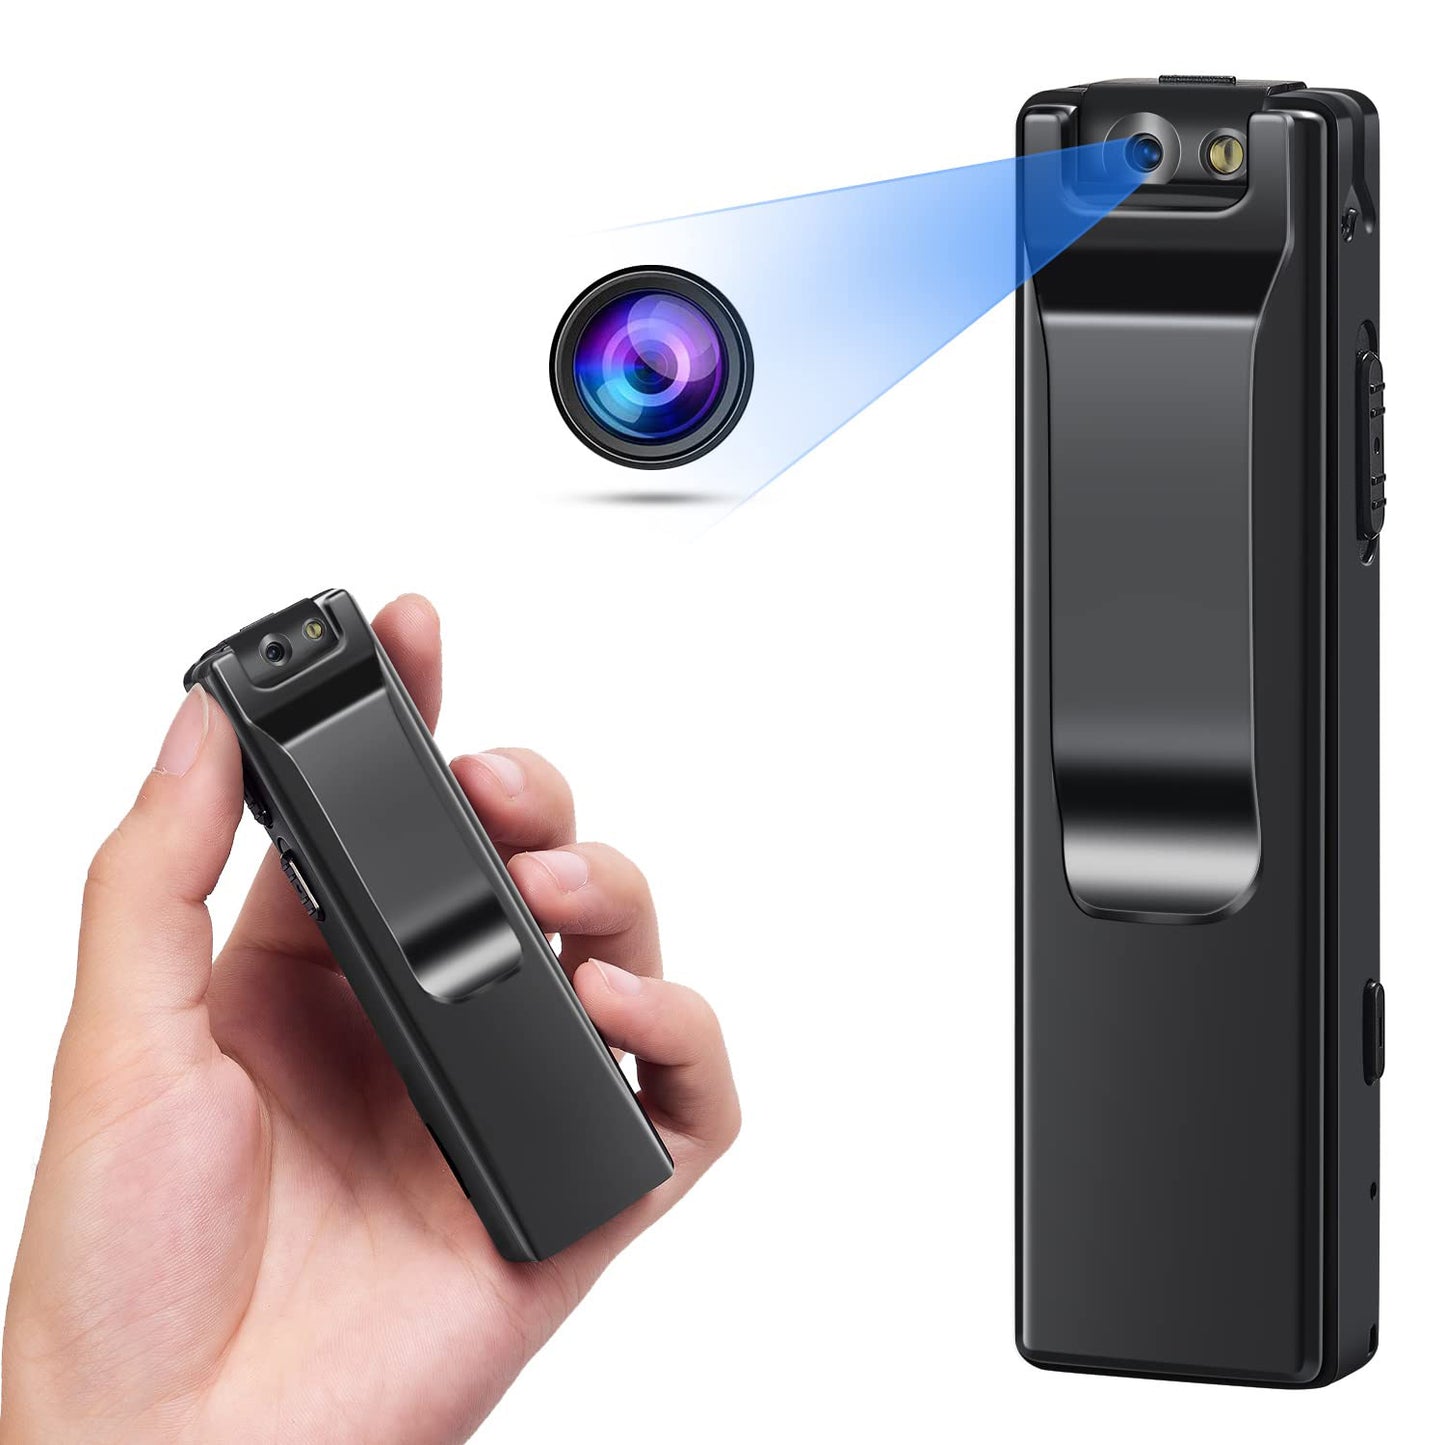 MIni Pocket Spy Camera